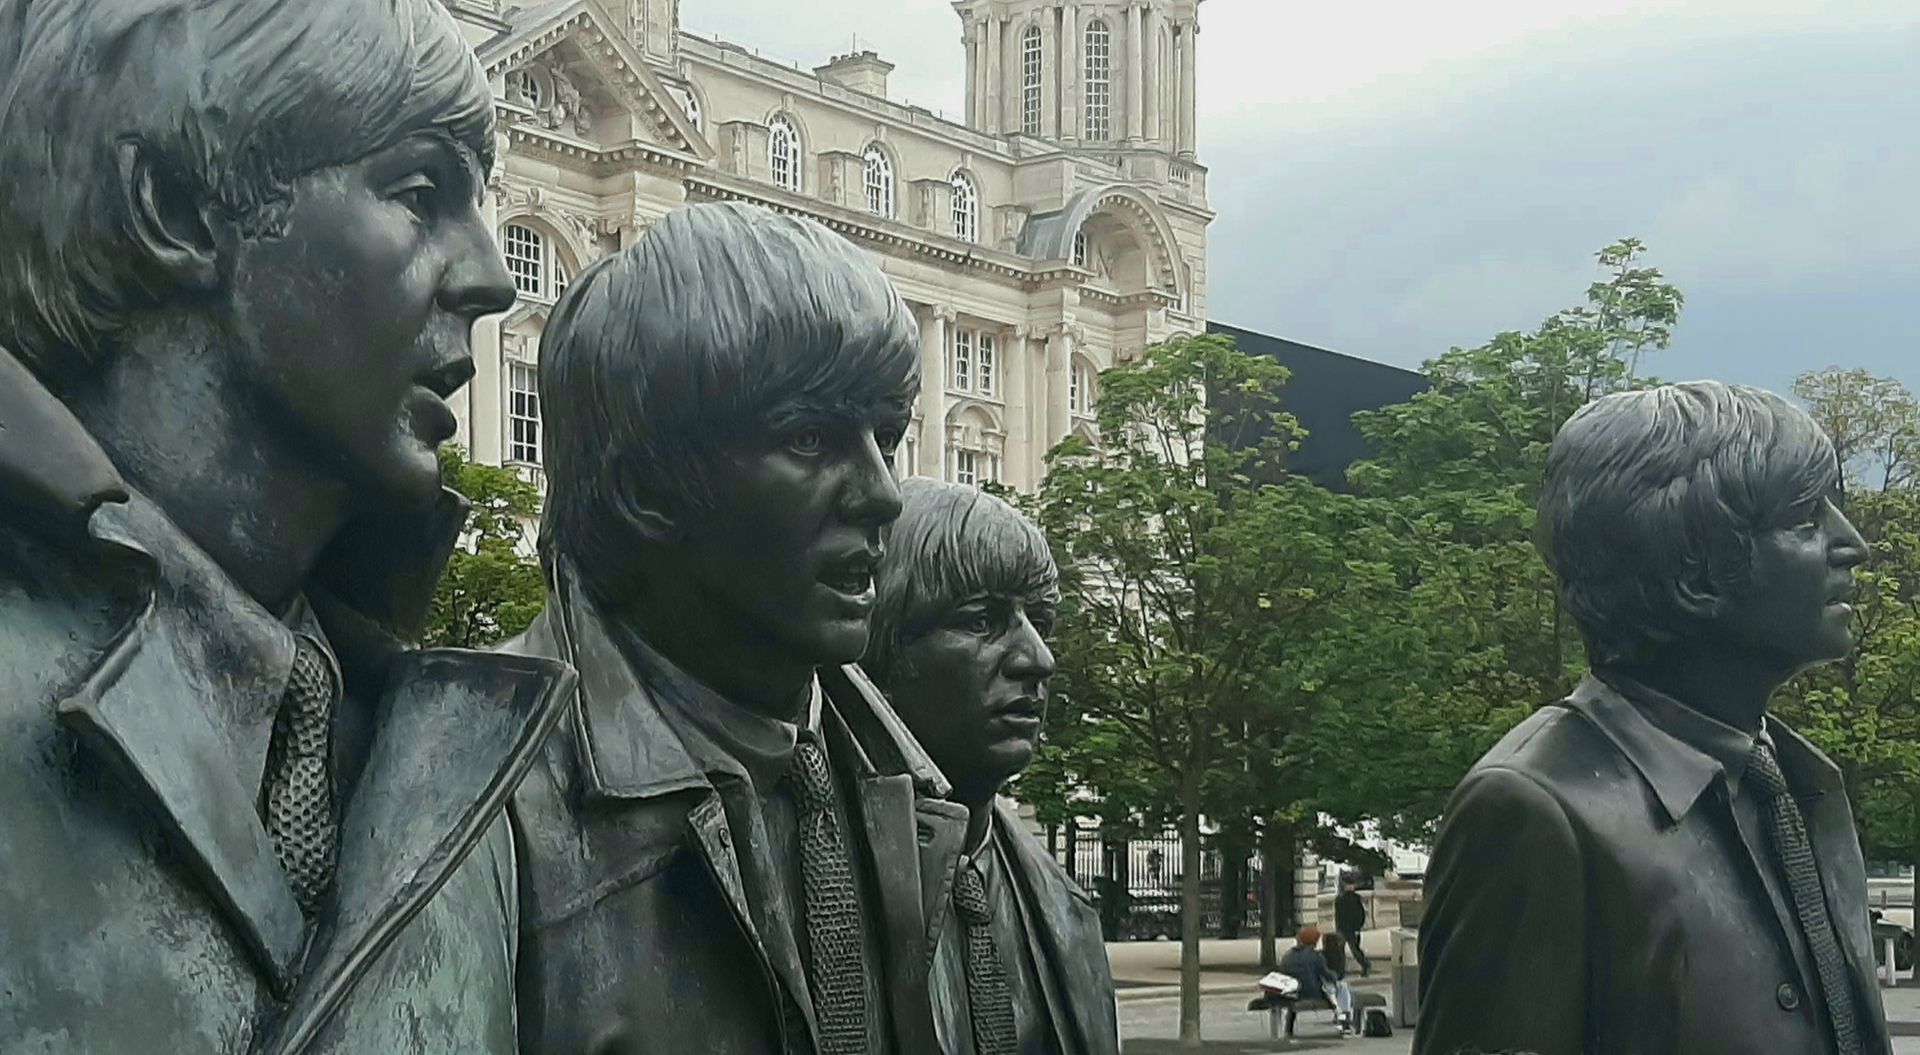 Beatles Statue in Liverpool